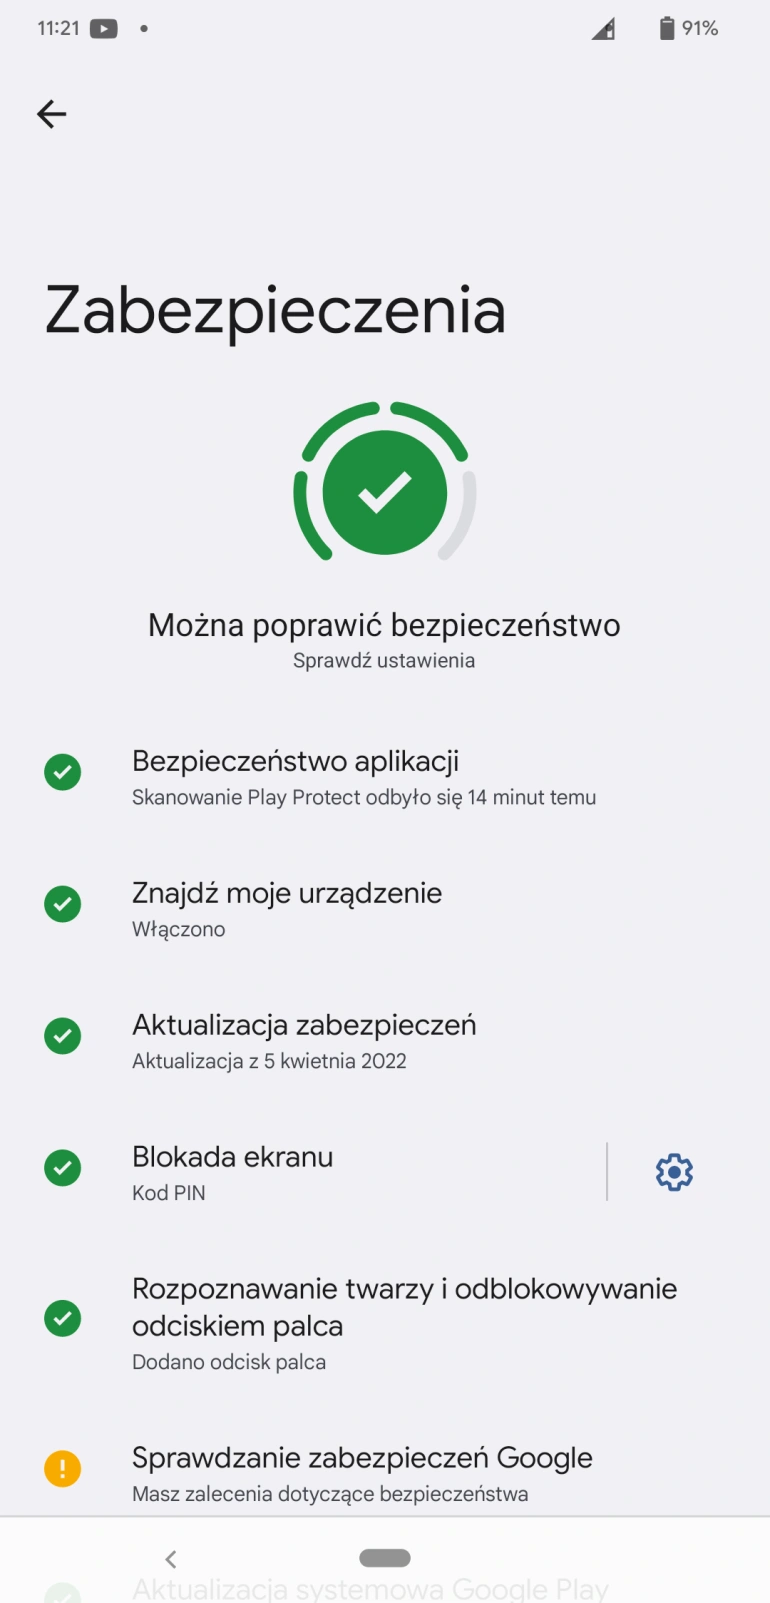 <p>Pulpit zabezpieczeń w Androidzie 12</p>

<p>fot. Daniel Olszewski / Computerworld.pl</p>